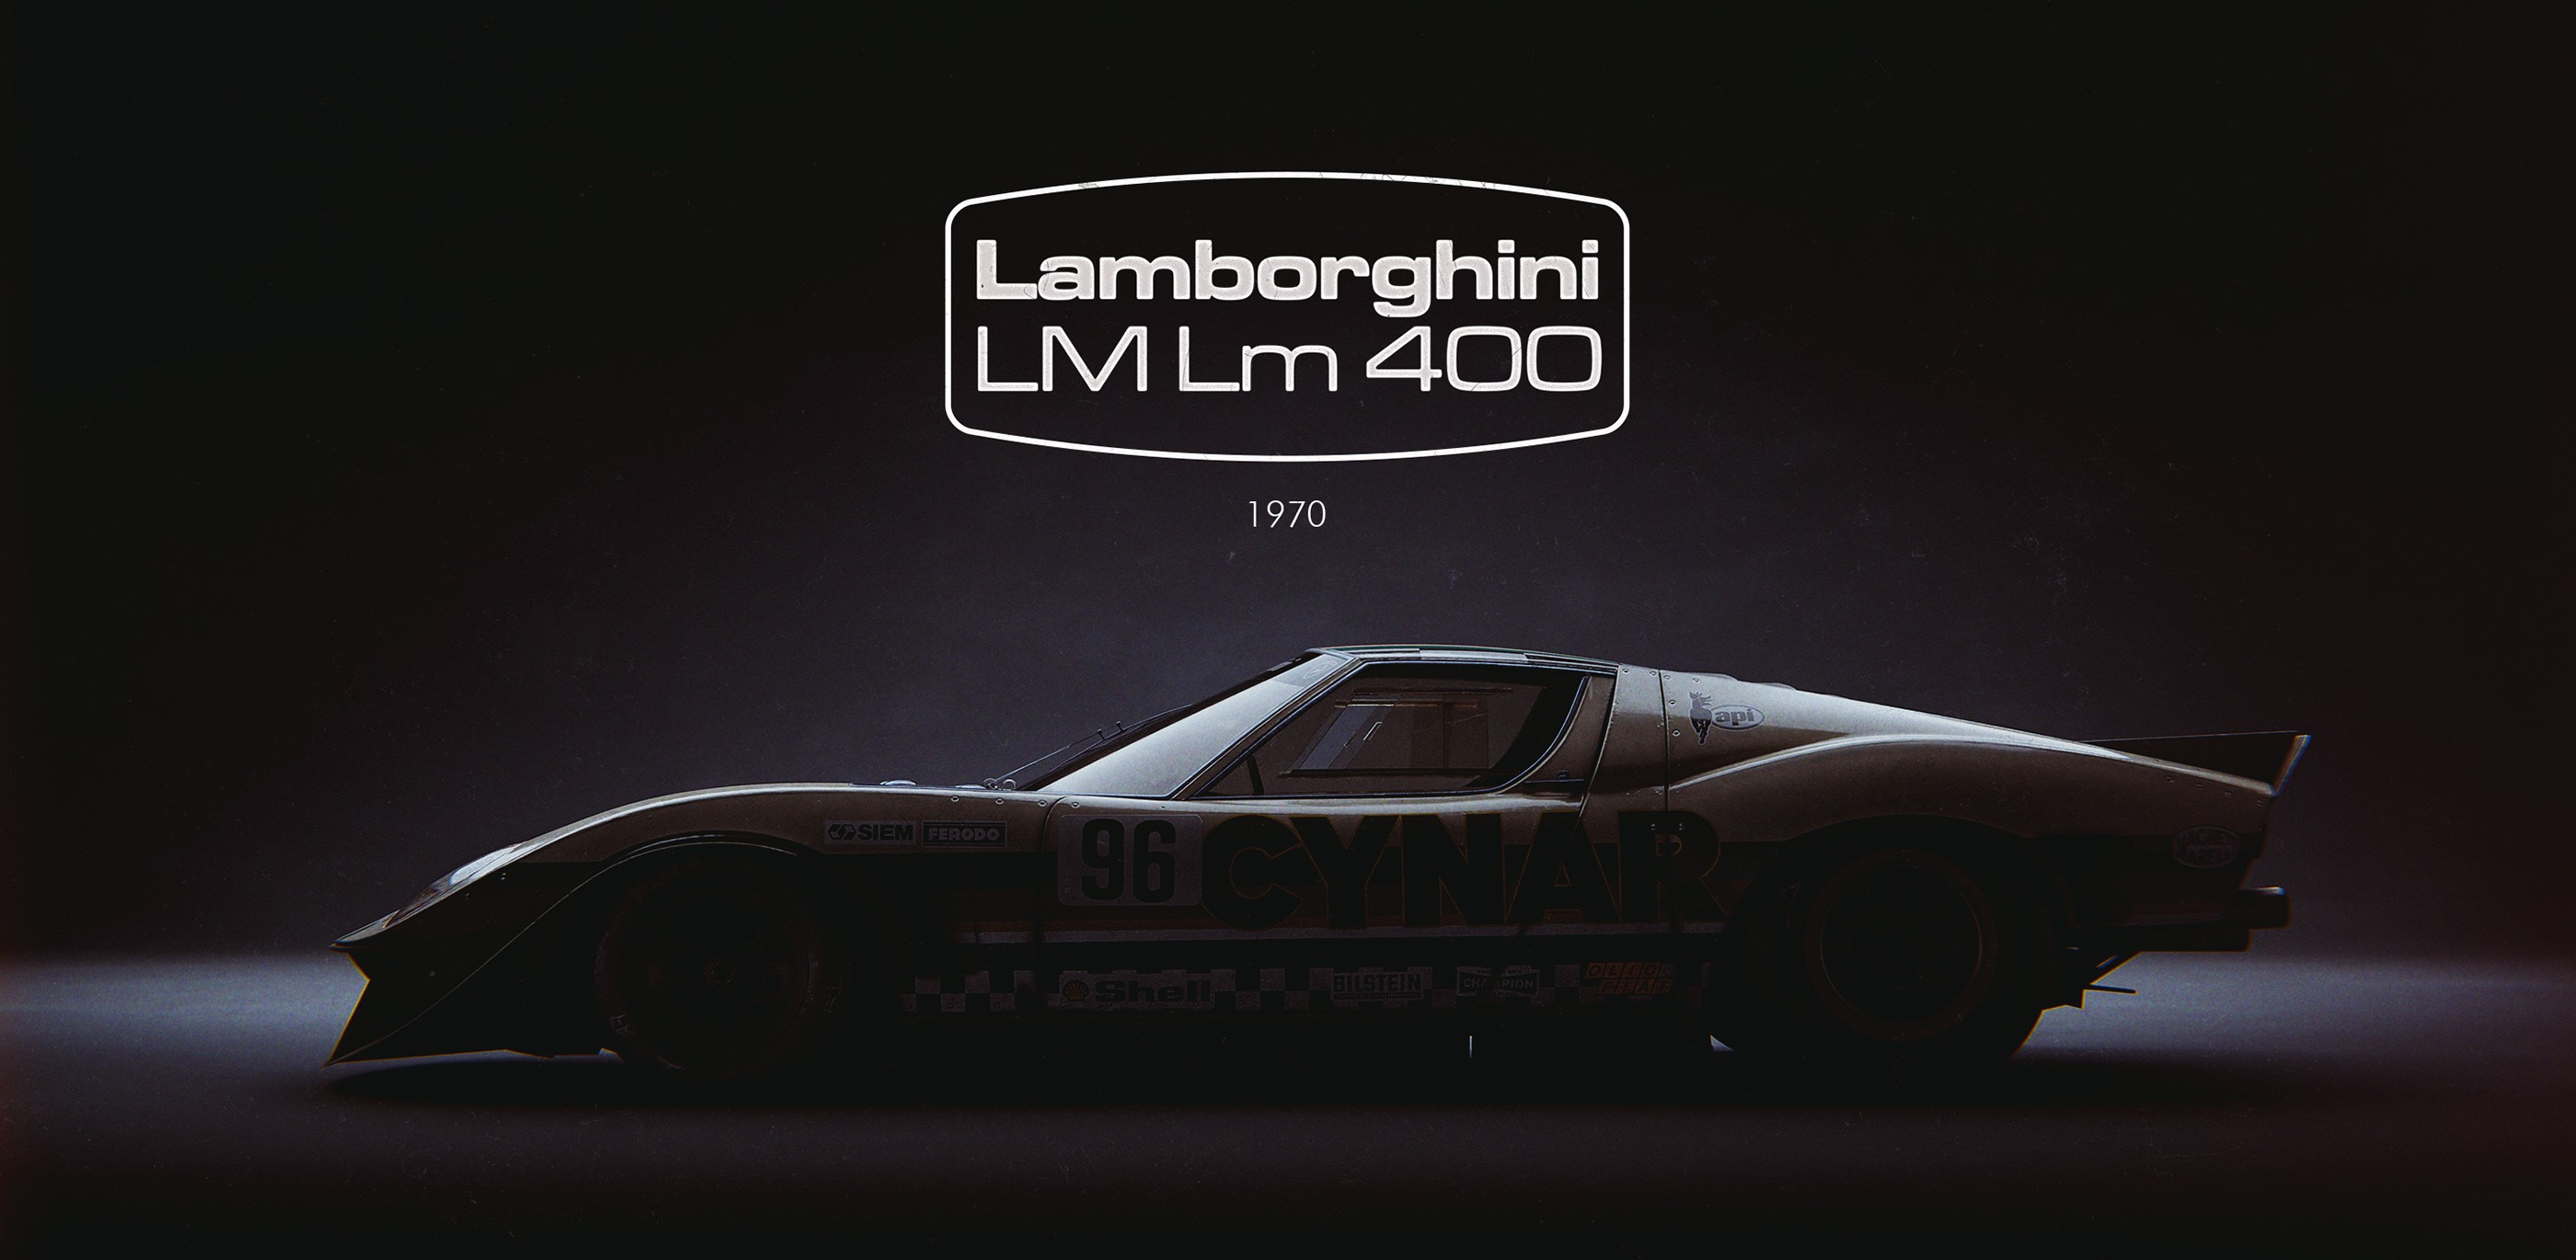 The Lamborghini Miura 